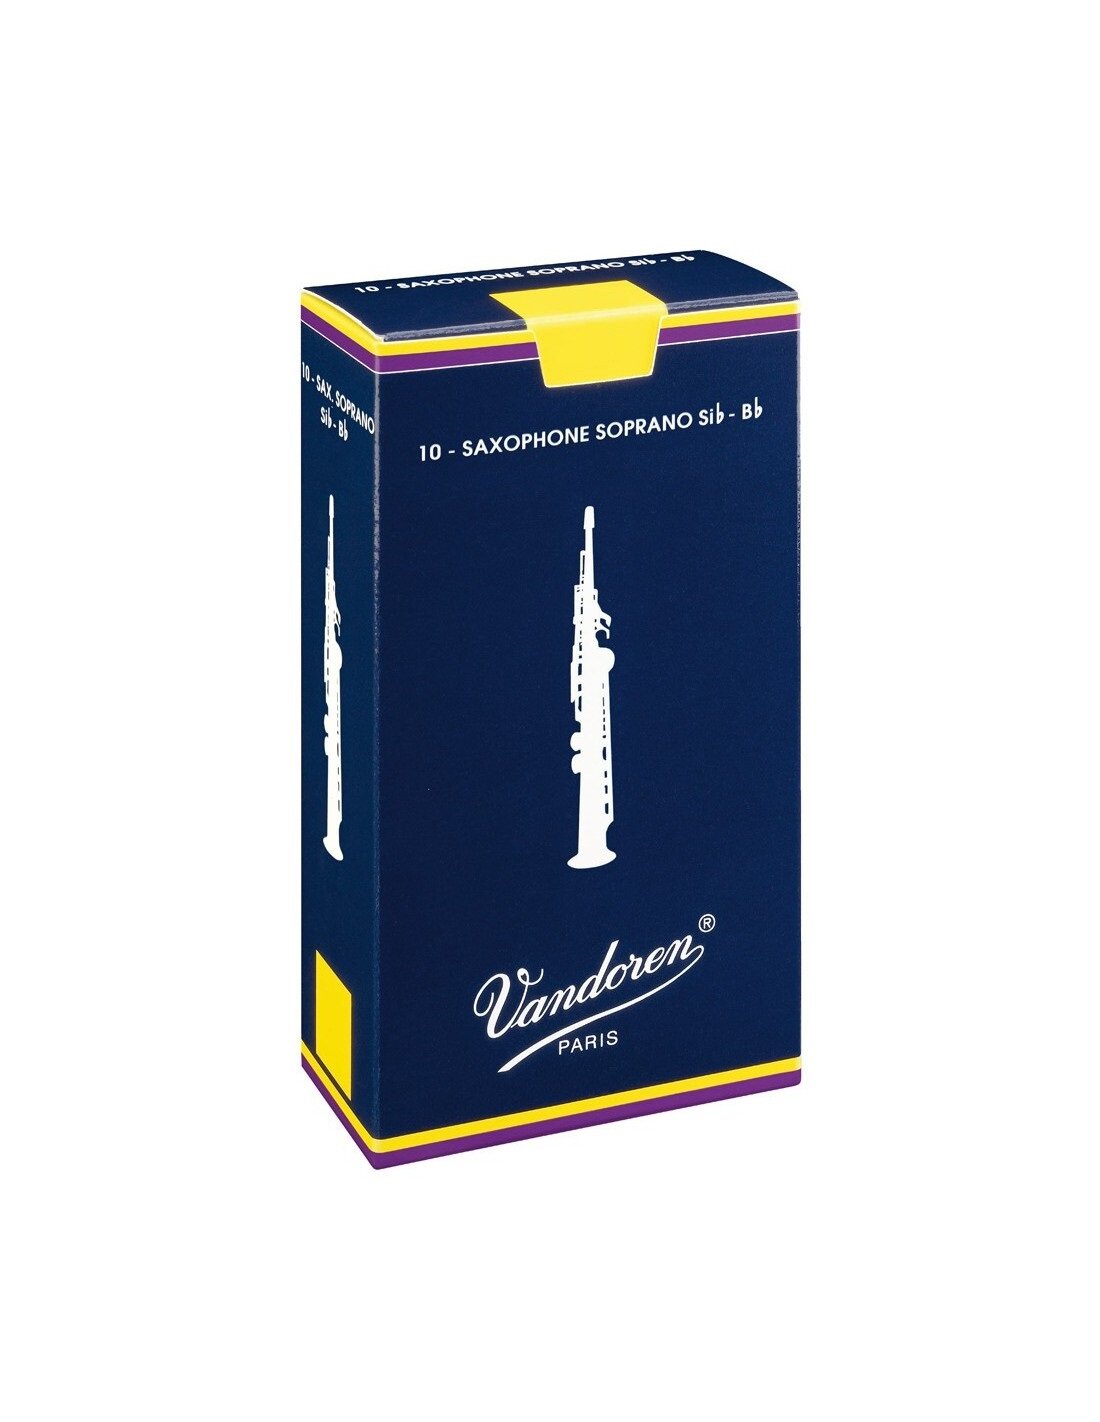 Vandoren Classic Saxophone Soprano Sib Force 2.5 x10 : photo 1